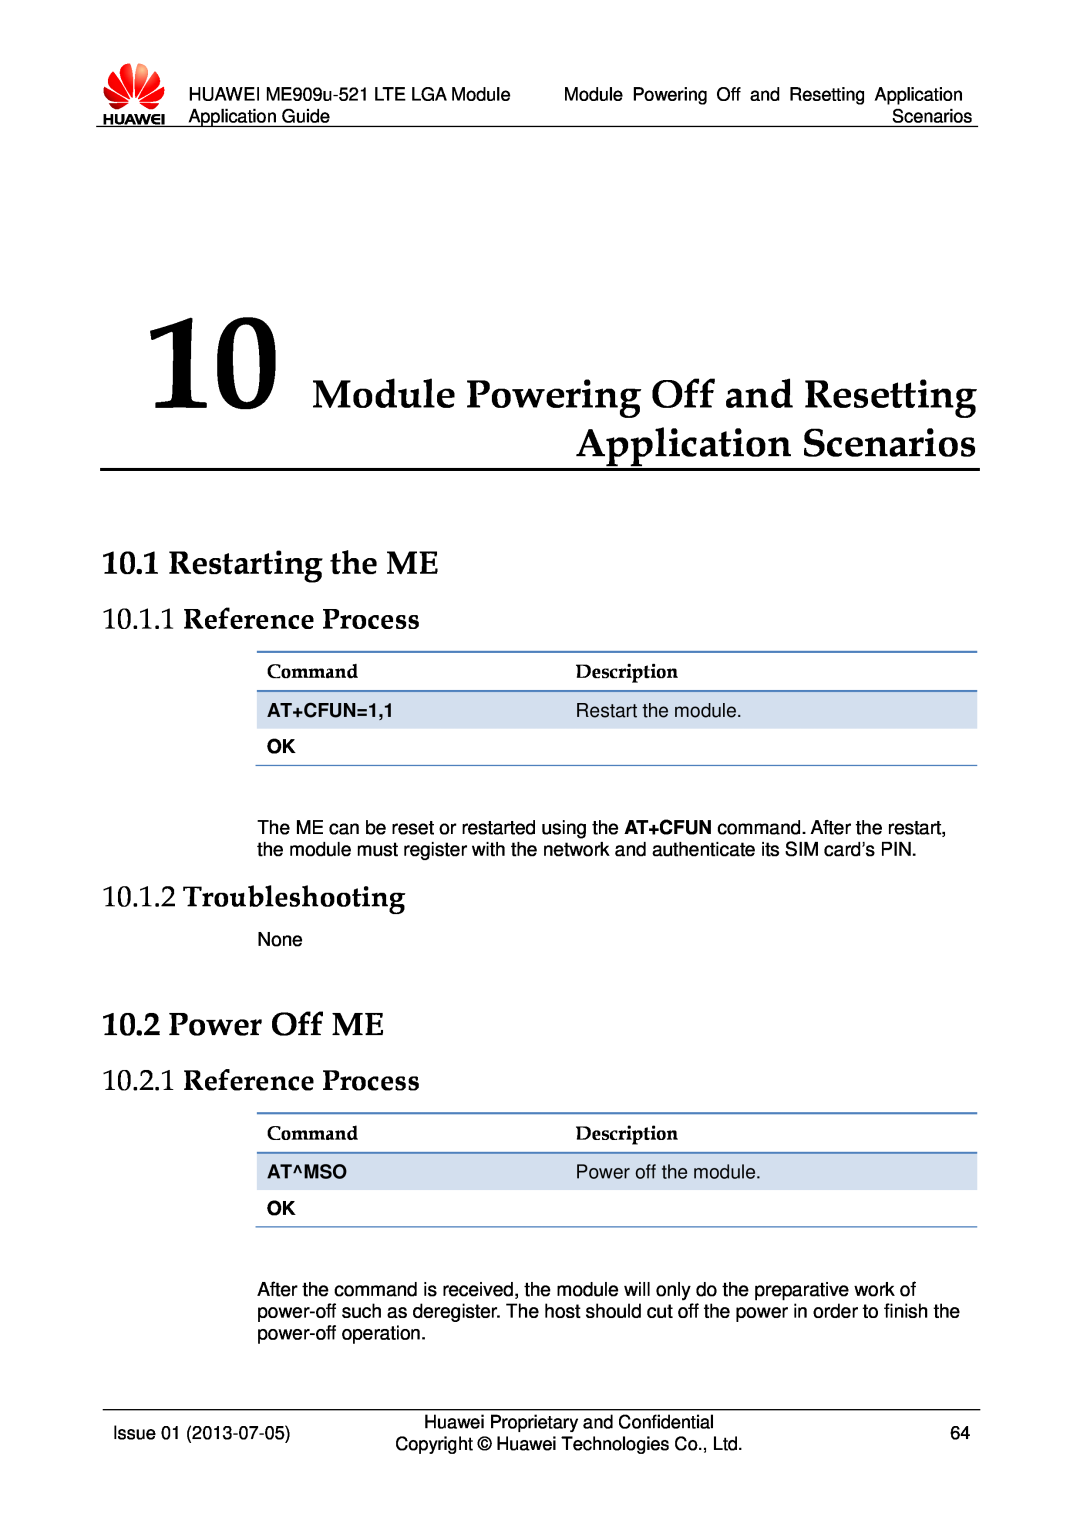 Huawei ME909u-521 manual Module Powering Off and Resetting Application Scenarios, Restarting the ME, Power Off ME 